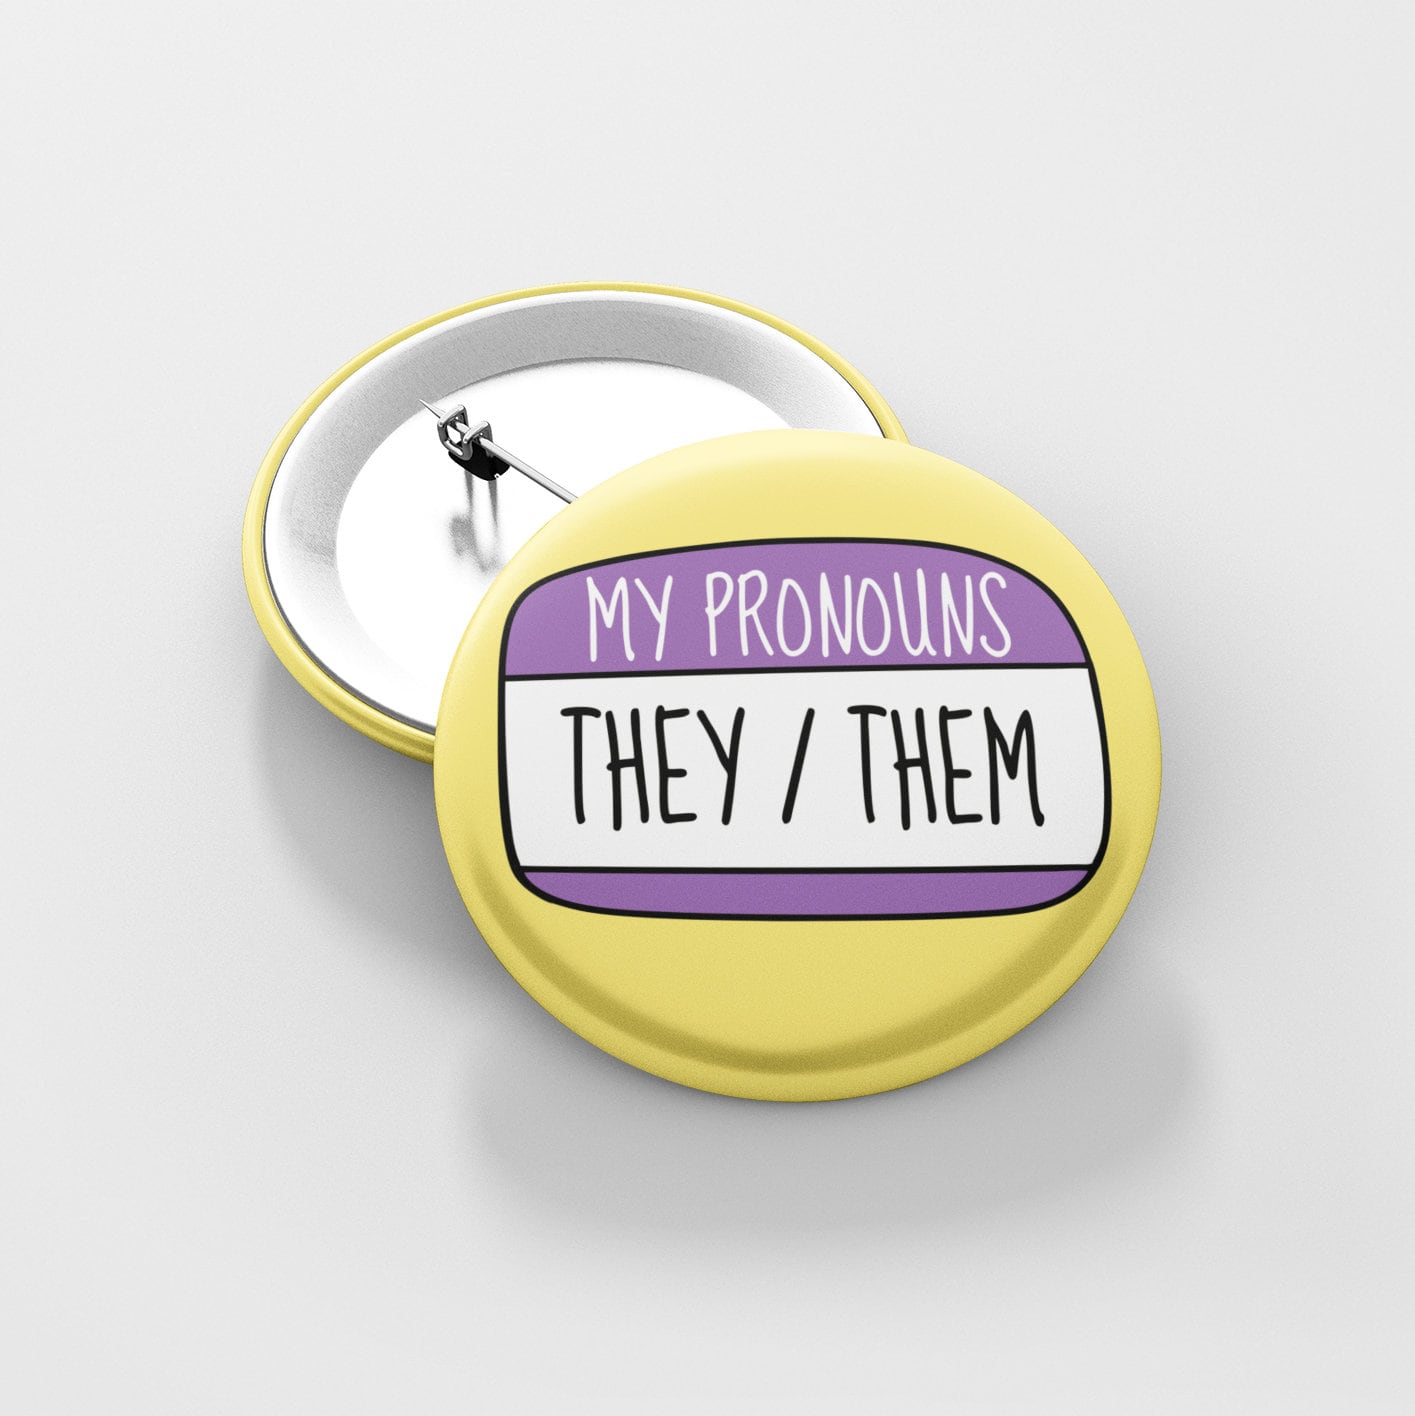 My Pronouns They Them Badge Pin / Gender Pin -  Pronoun Badge - They them pin - Non binary pride